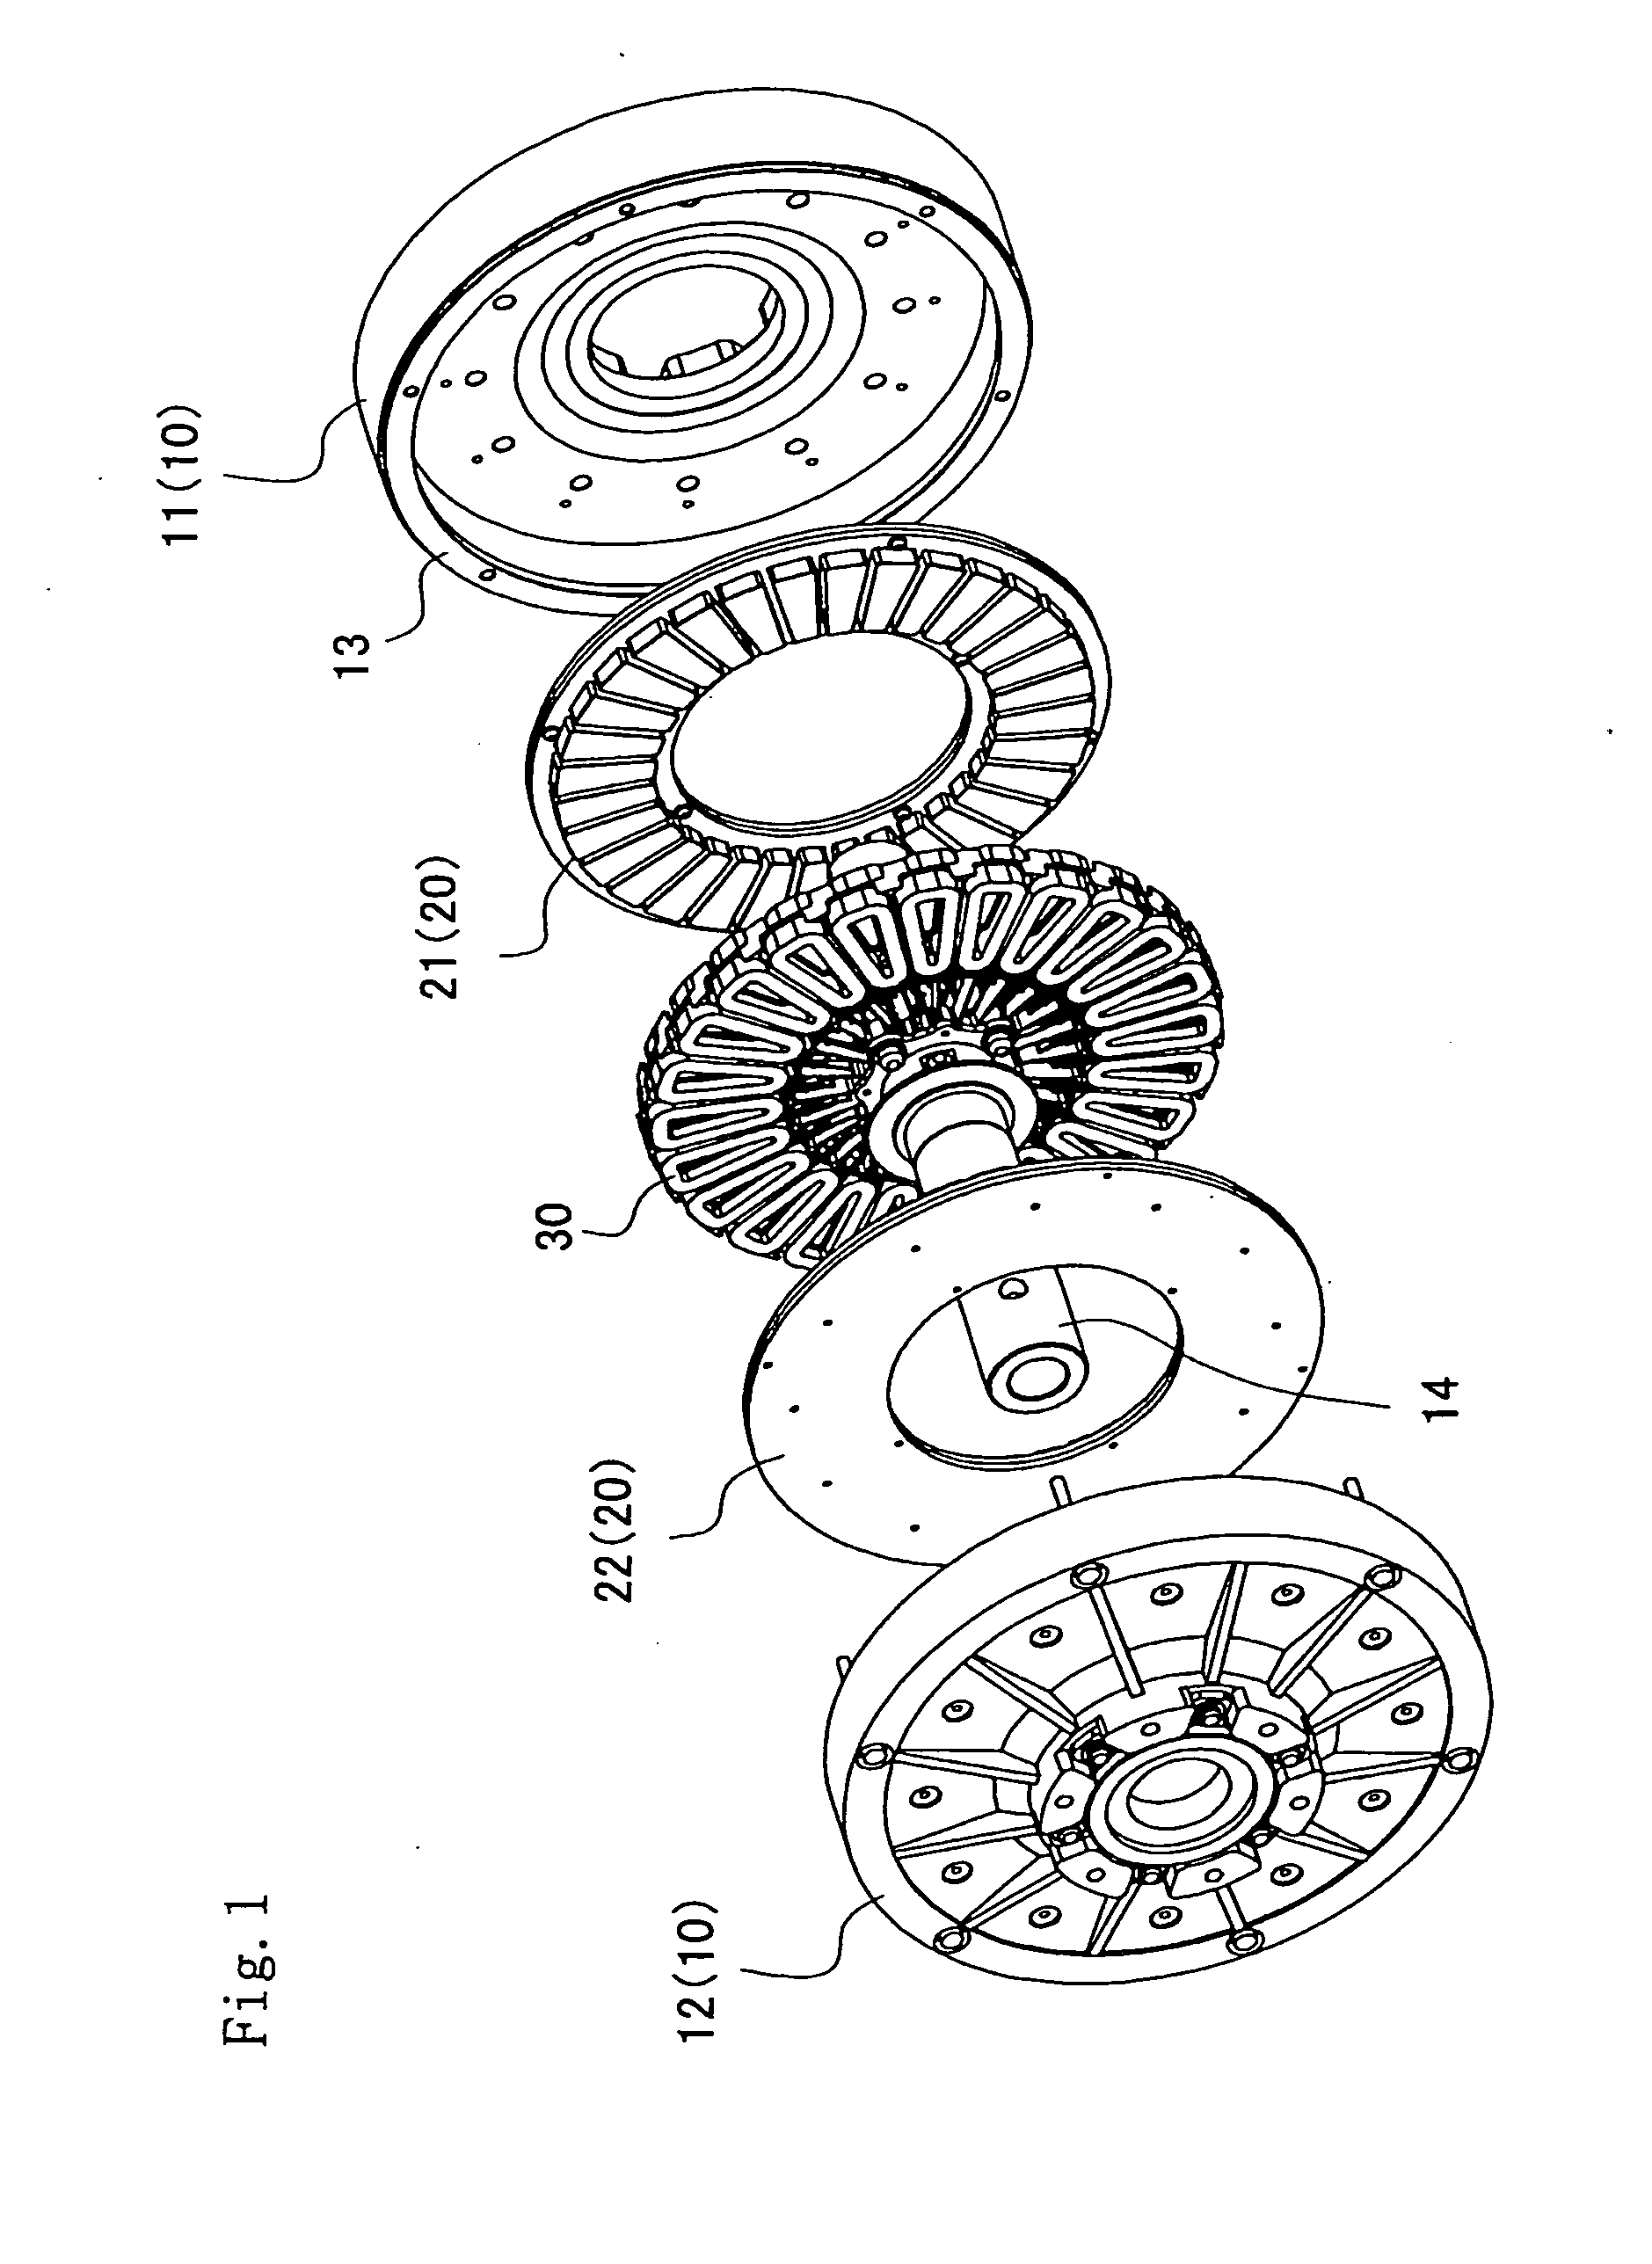 Axial gap type rotating apparatus and axial gap type generator